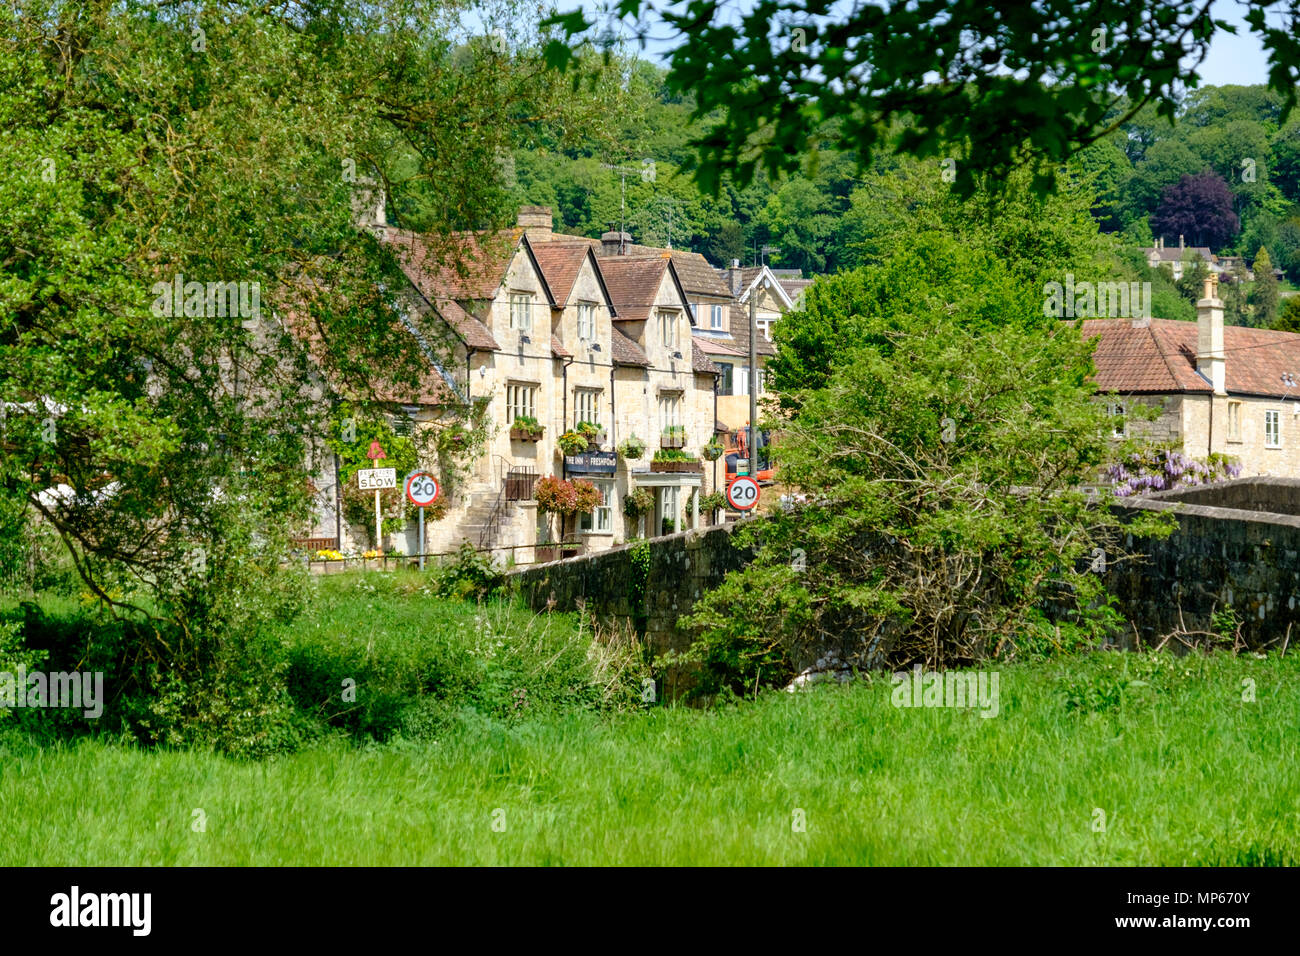 The Inn at Freshford. Freshford is a village in the Avon valley near Bath in somerset england UK Stock Photo